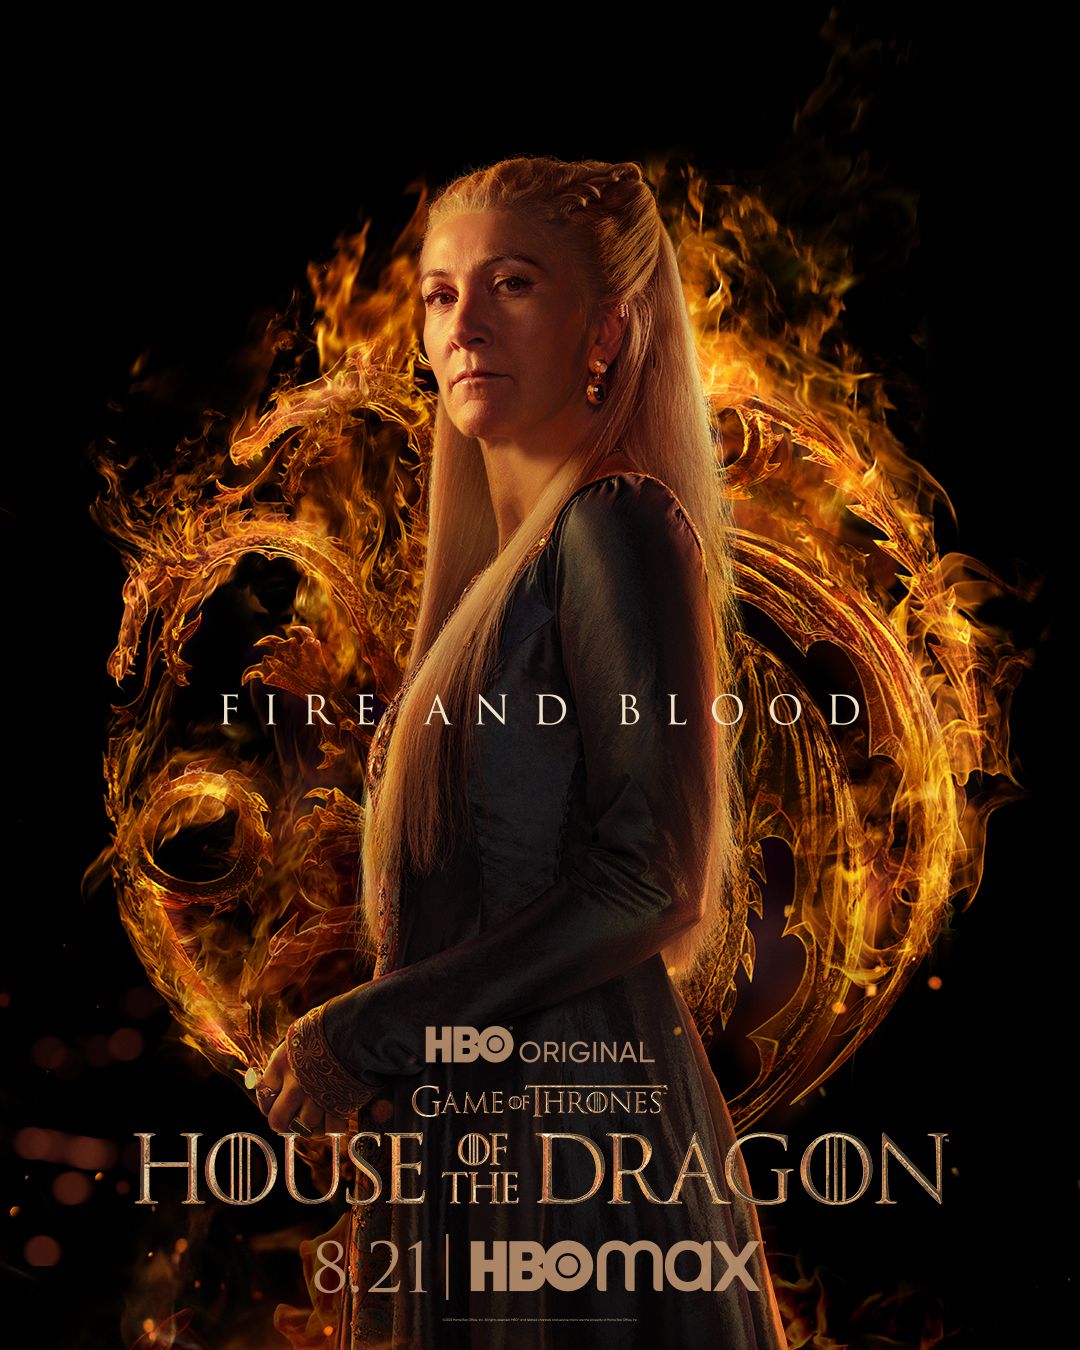 Rhaenys Targaryen in House of the Dragon poster